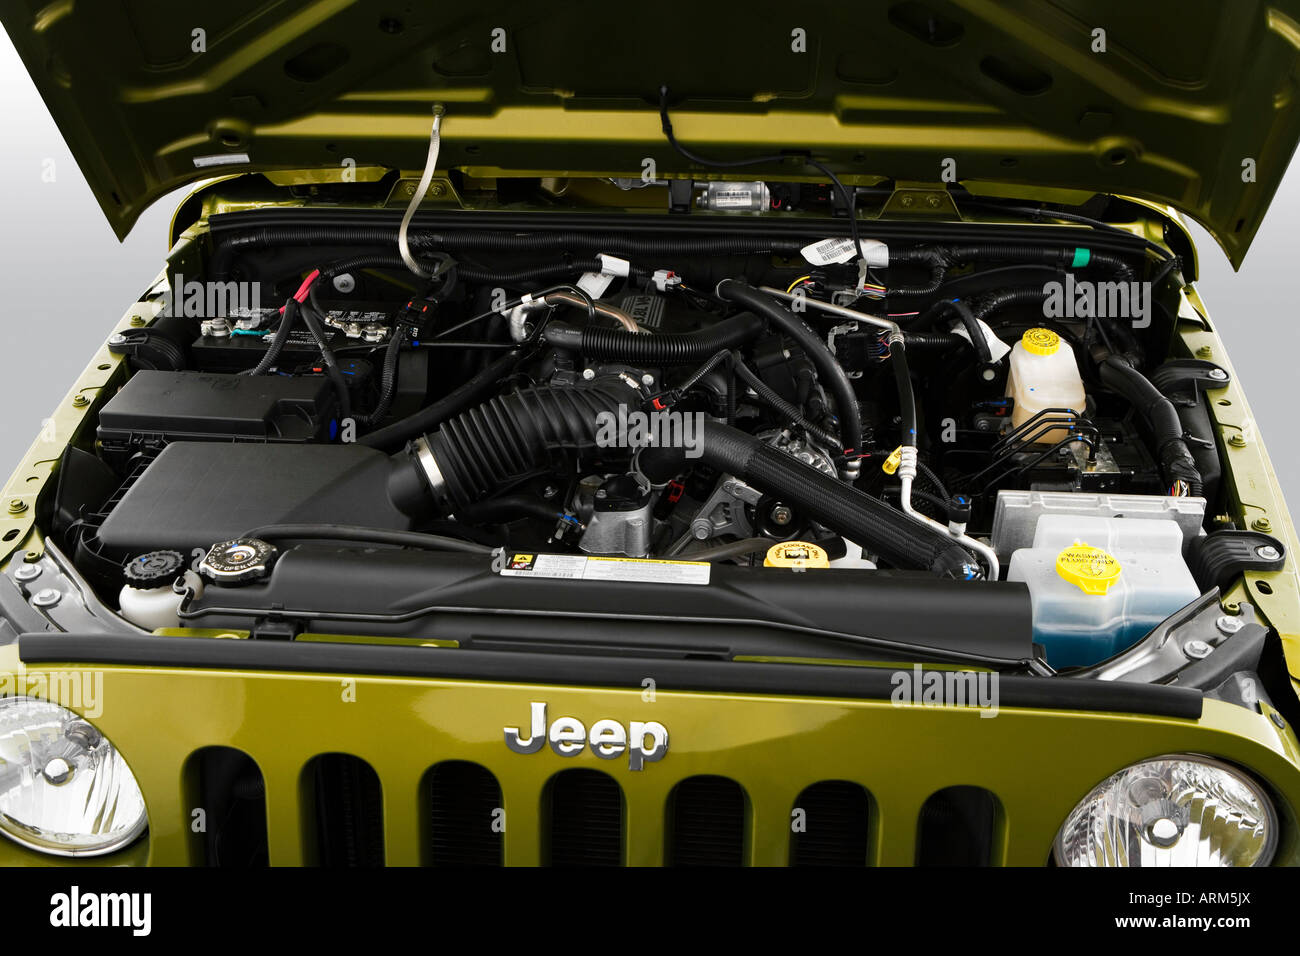 Arriba 102+ imagen motor de jeep wrangler 2008